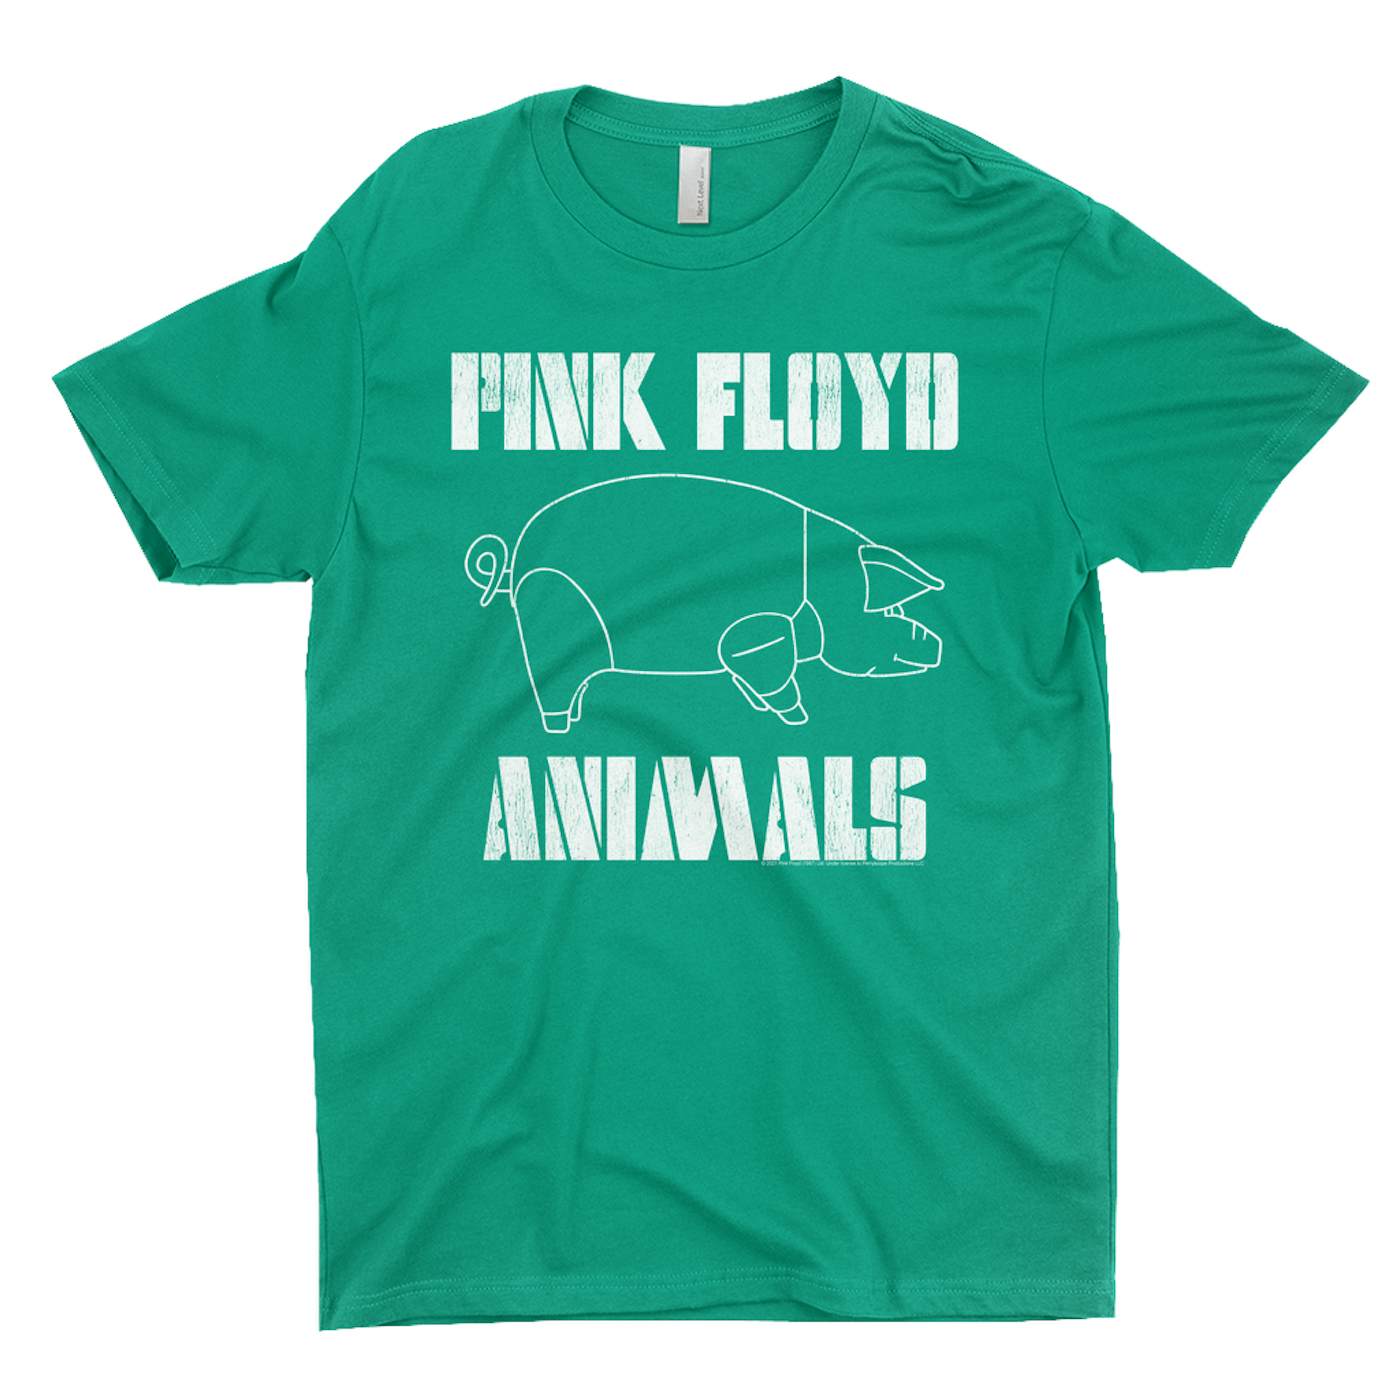 Floyd T-Shirt | David Gilmour's Animals Design Pink Floyd (Merchbar Exclusive)